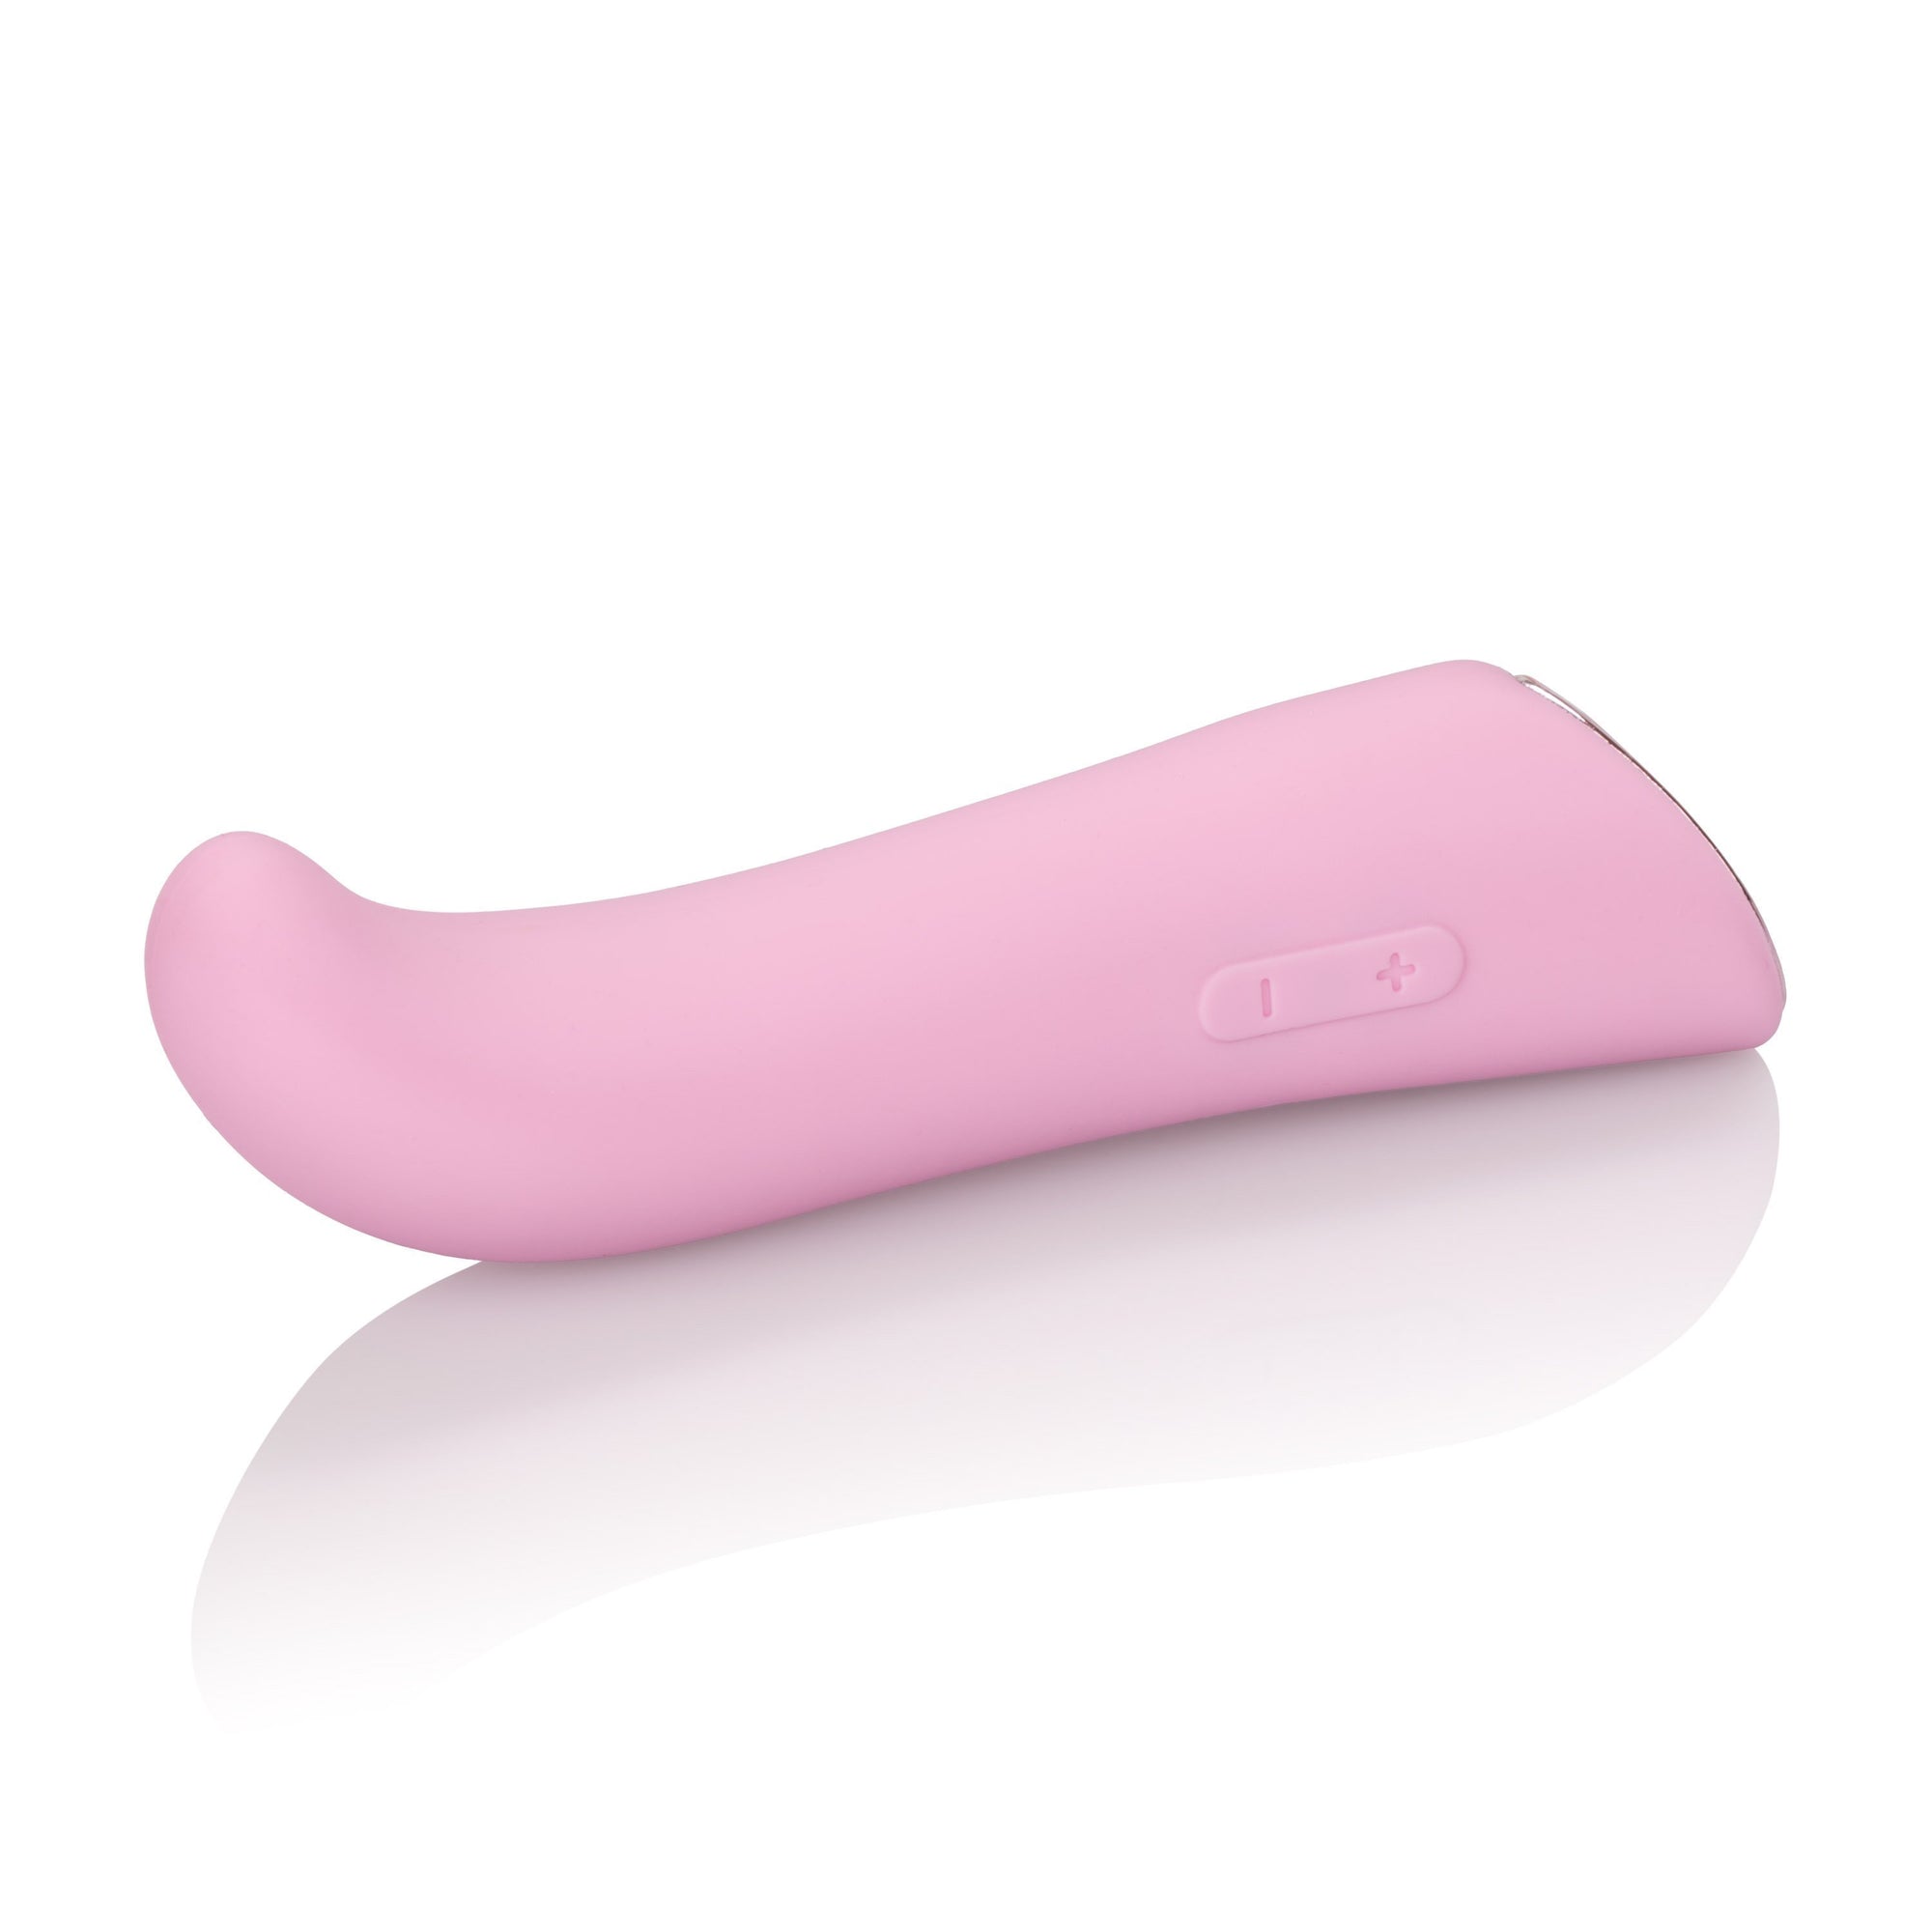 Jopen - Amour Silicone Mini G Spot Vibrator (Pink) G Spot Dildo (Vibration) Rechargeable Singapore